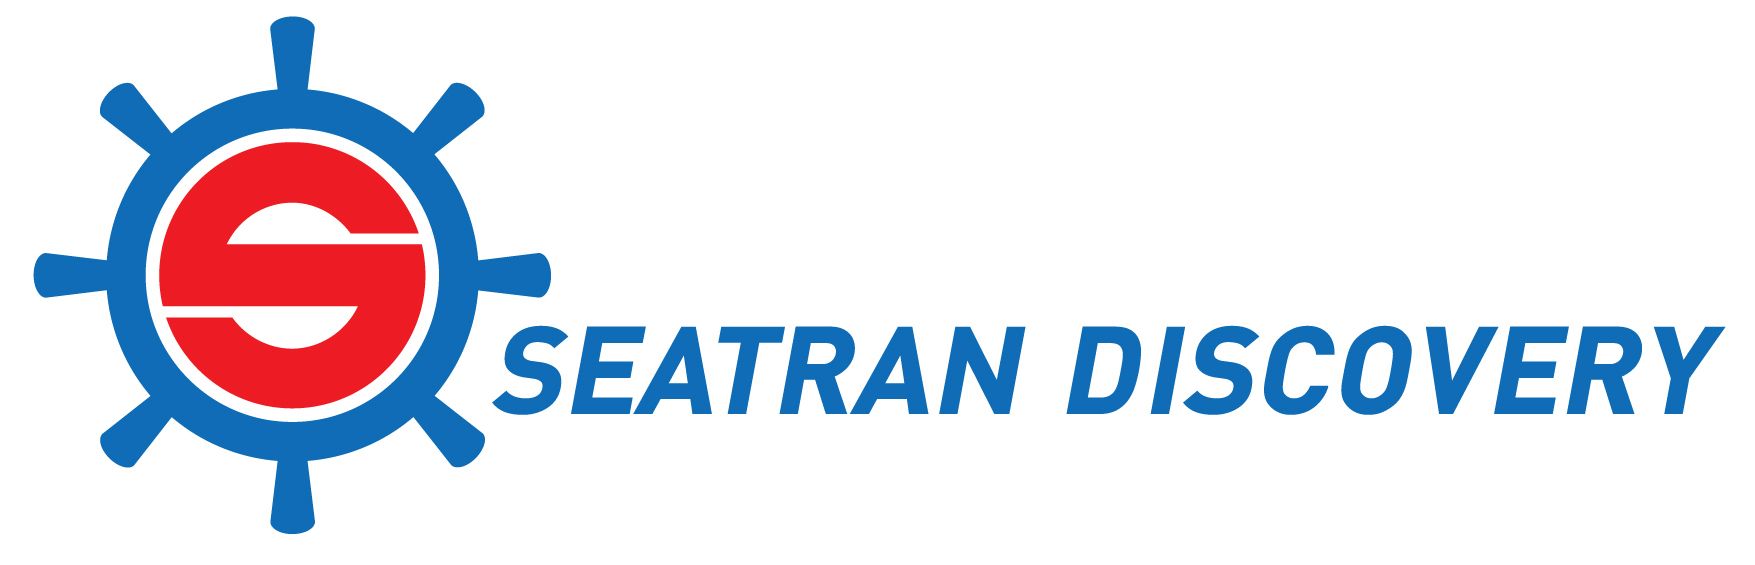 Seatran Discovery logo